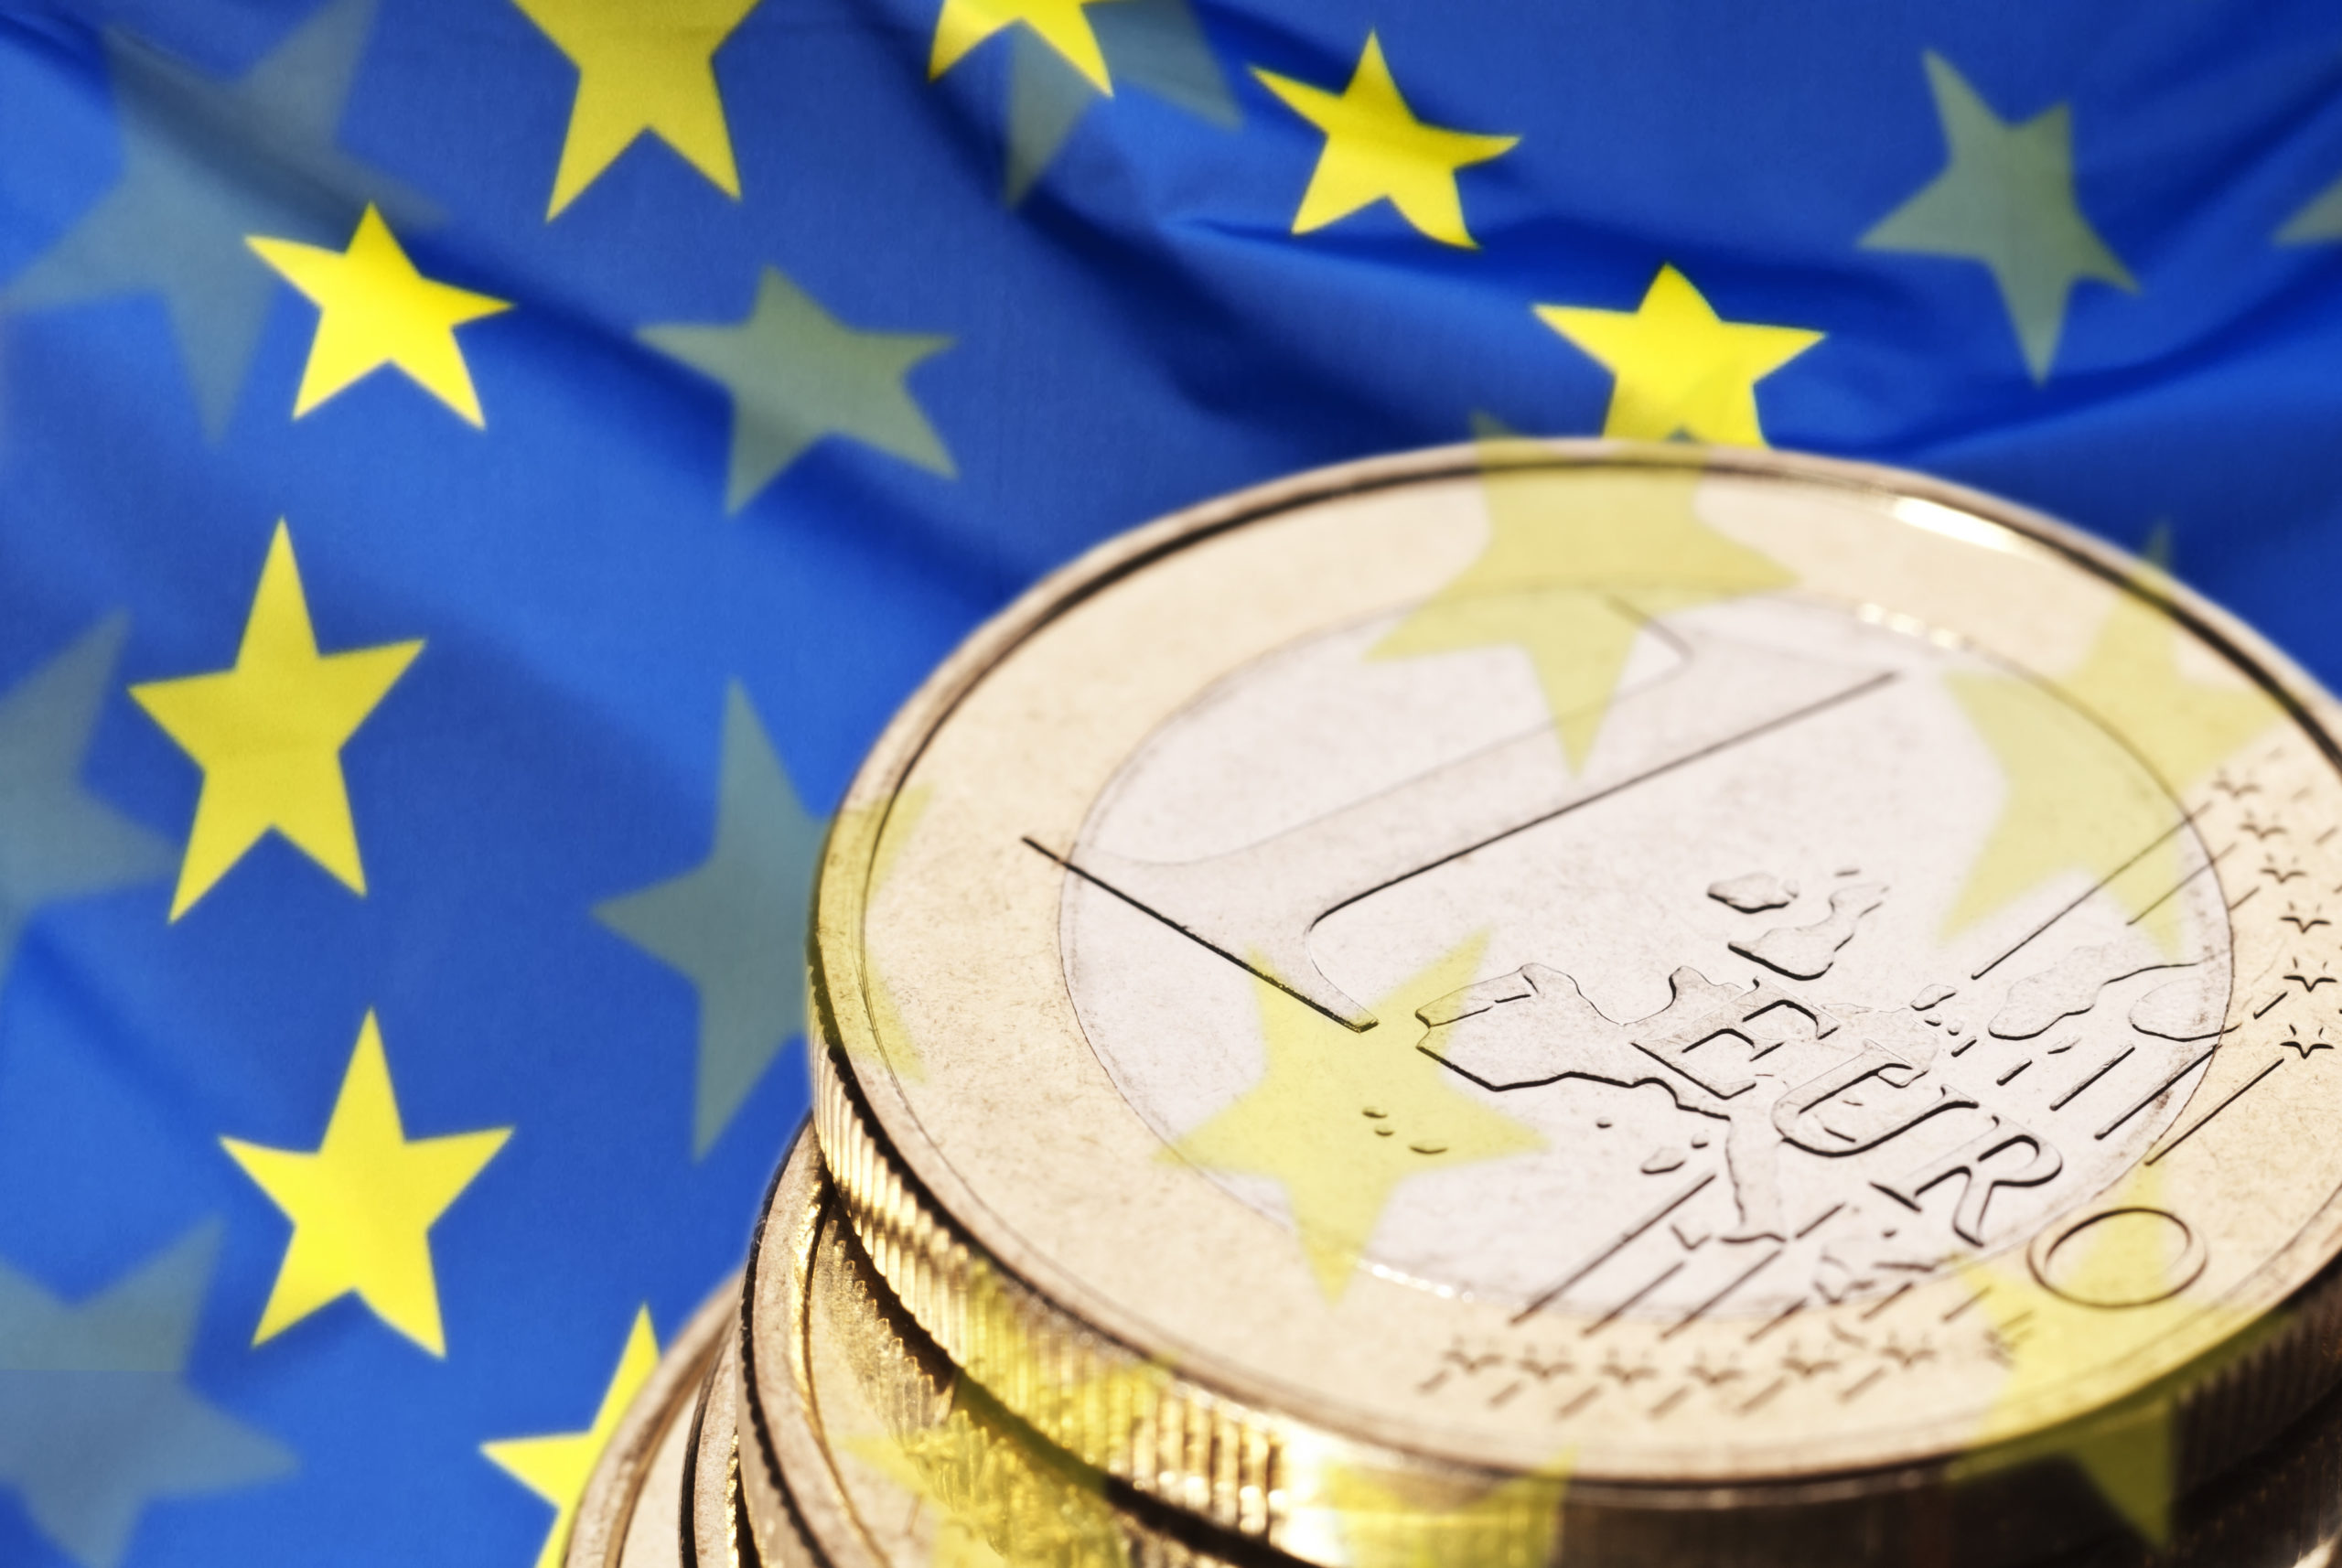 DAX at record highs despite rising euro